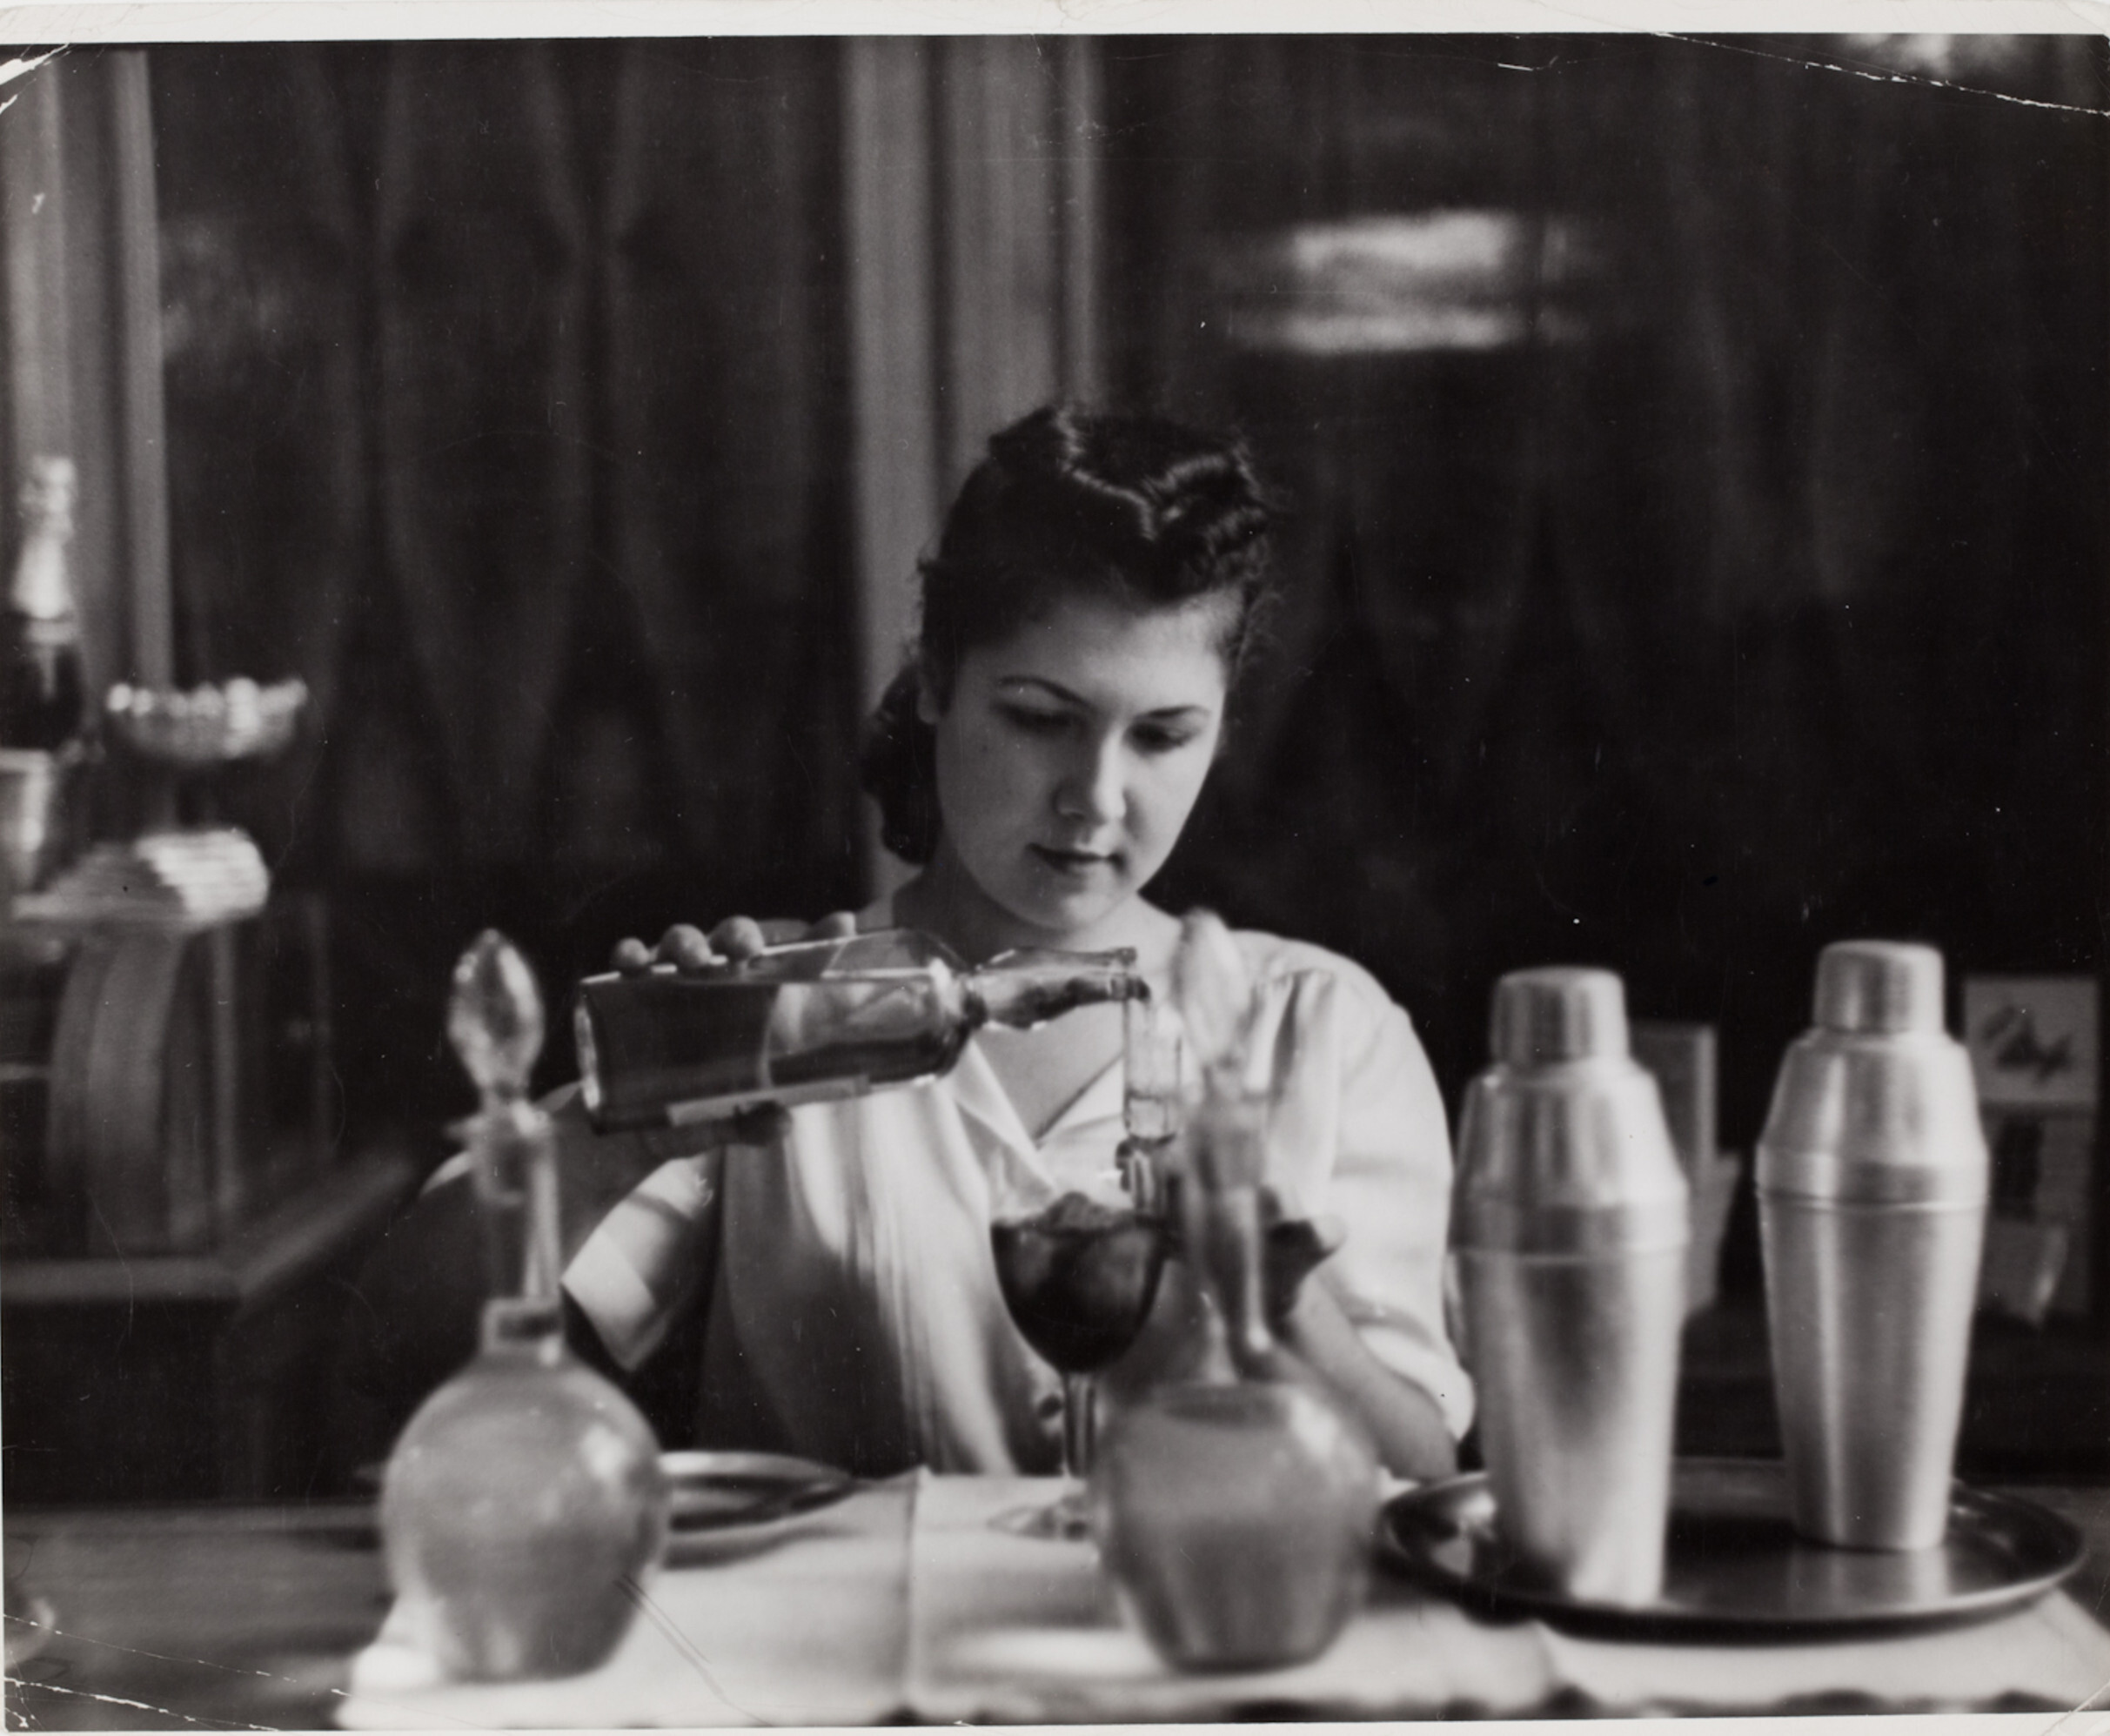 Бармен готовит коктейль, Киев, 1947 год. Фотограф Роберт Капа